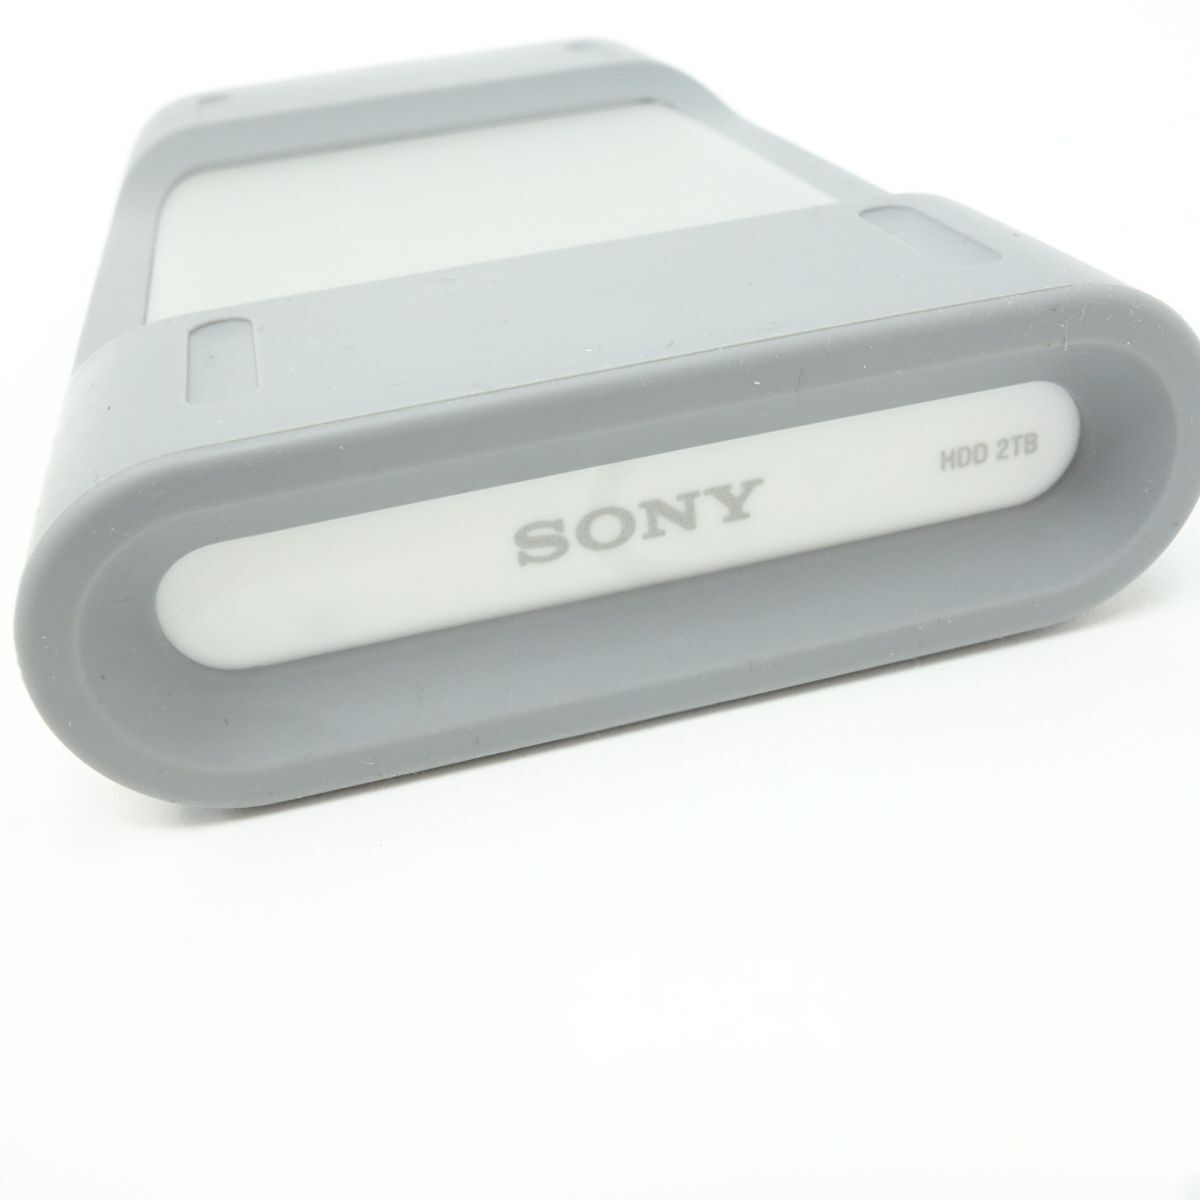 099 SONY/ Sony Pro-Media портативный хранение PSZ-HA2T 2TB установленный снаружи HDD * б/у 